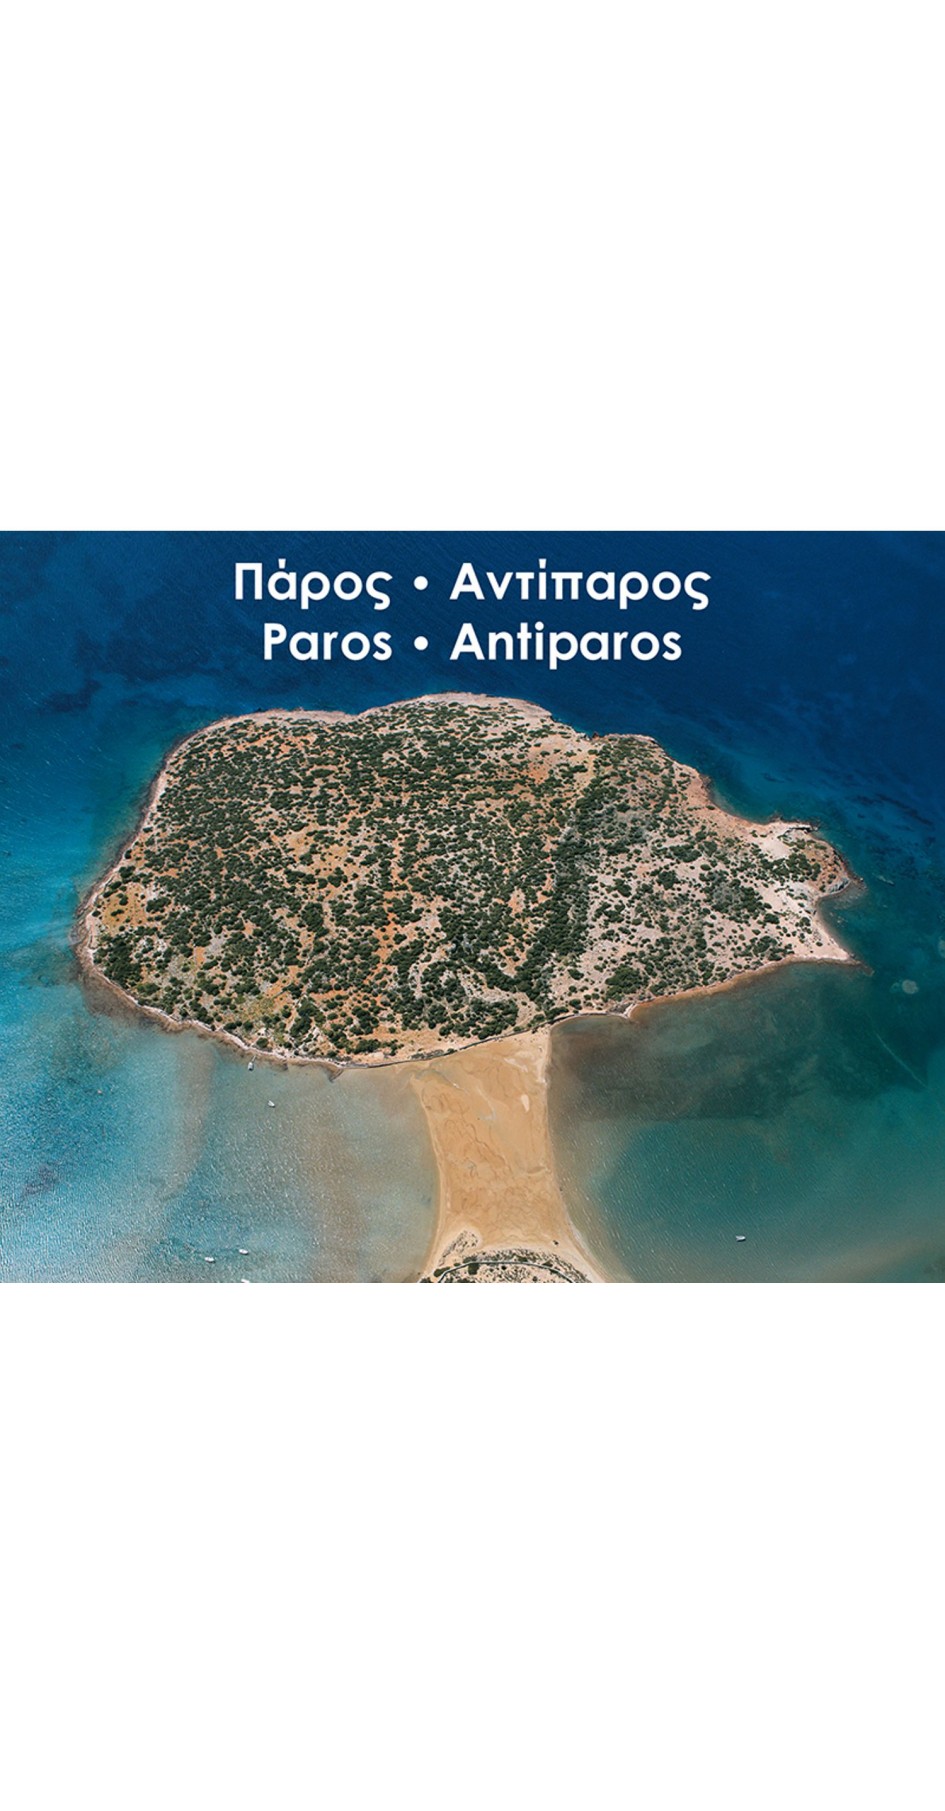 Paros - Antiparos: as the seagull flies (Hard cover version)